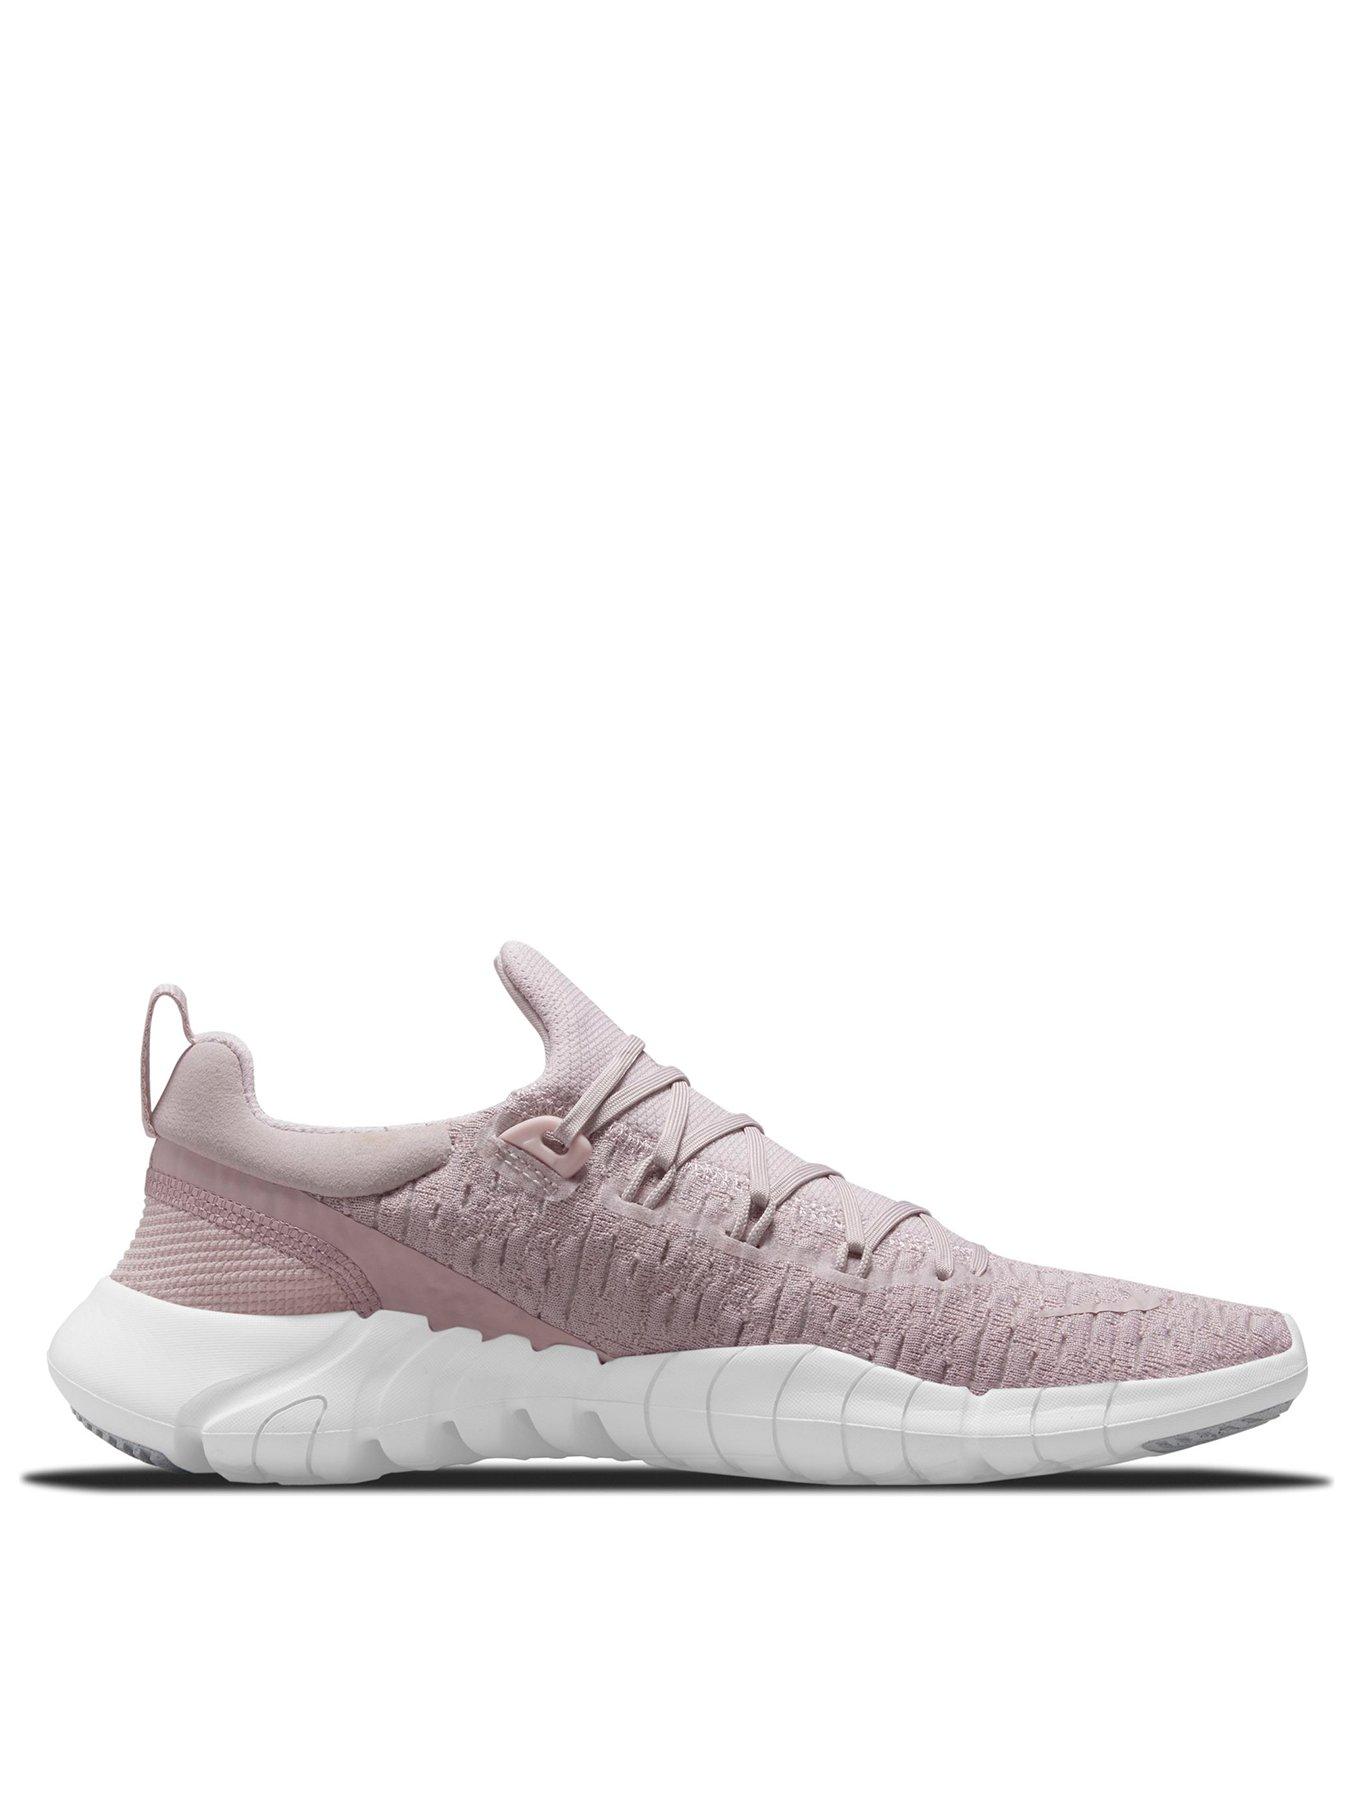 Nike Free 5.0 - Pink/White Very Ireland